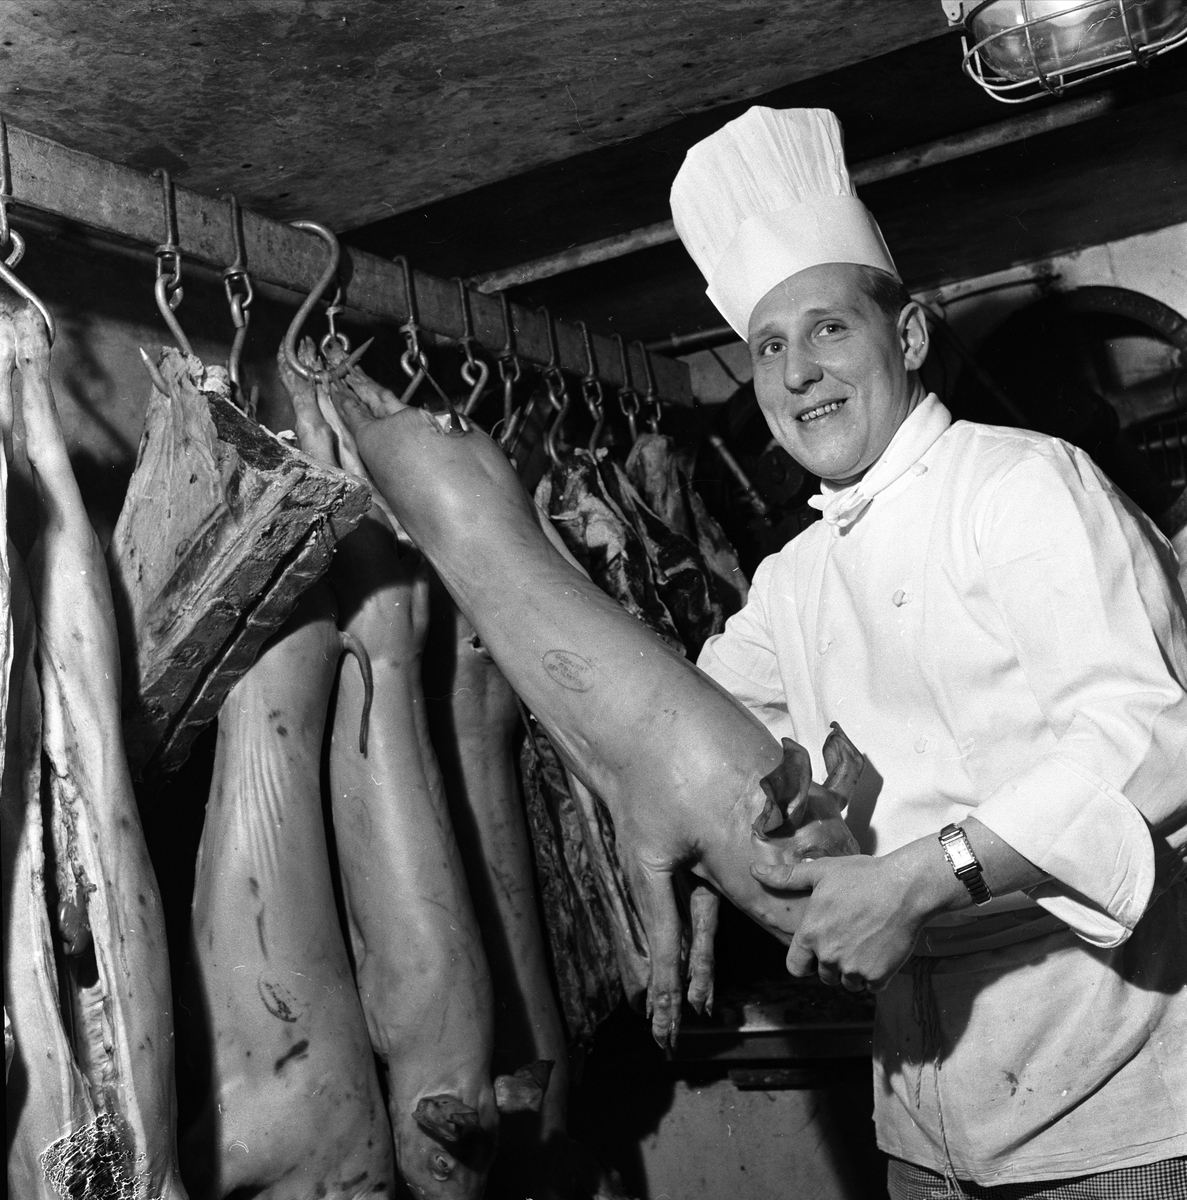 Norge, 06.12.1960. Julebordforberedelser på restaurant Steffens. Kokk med mat.